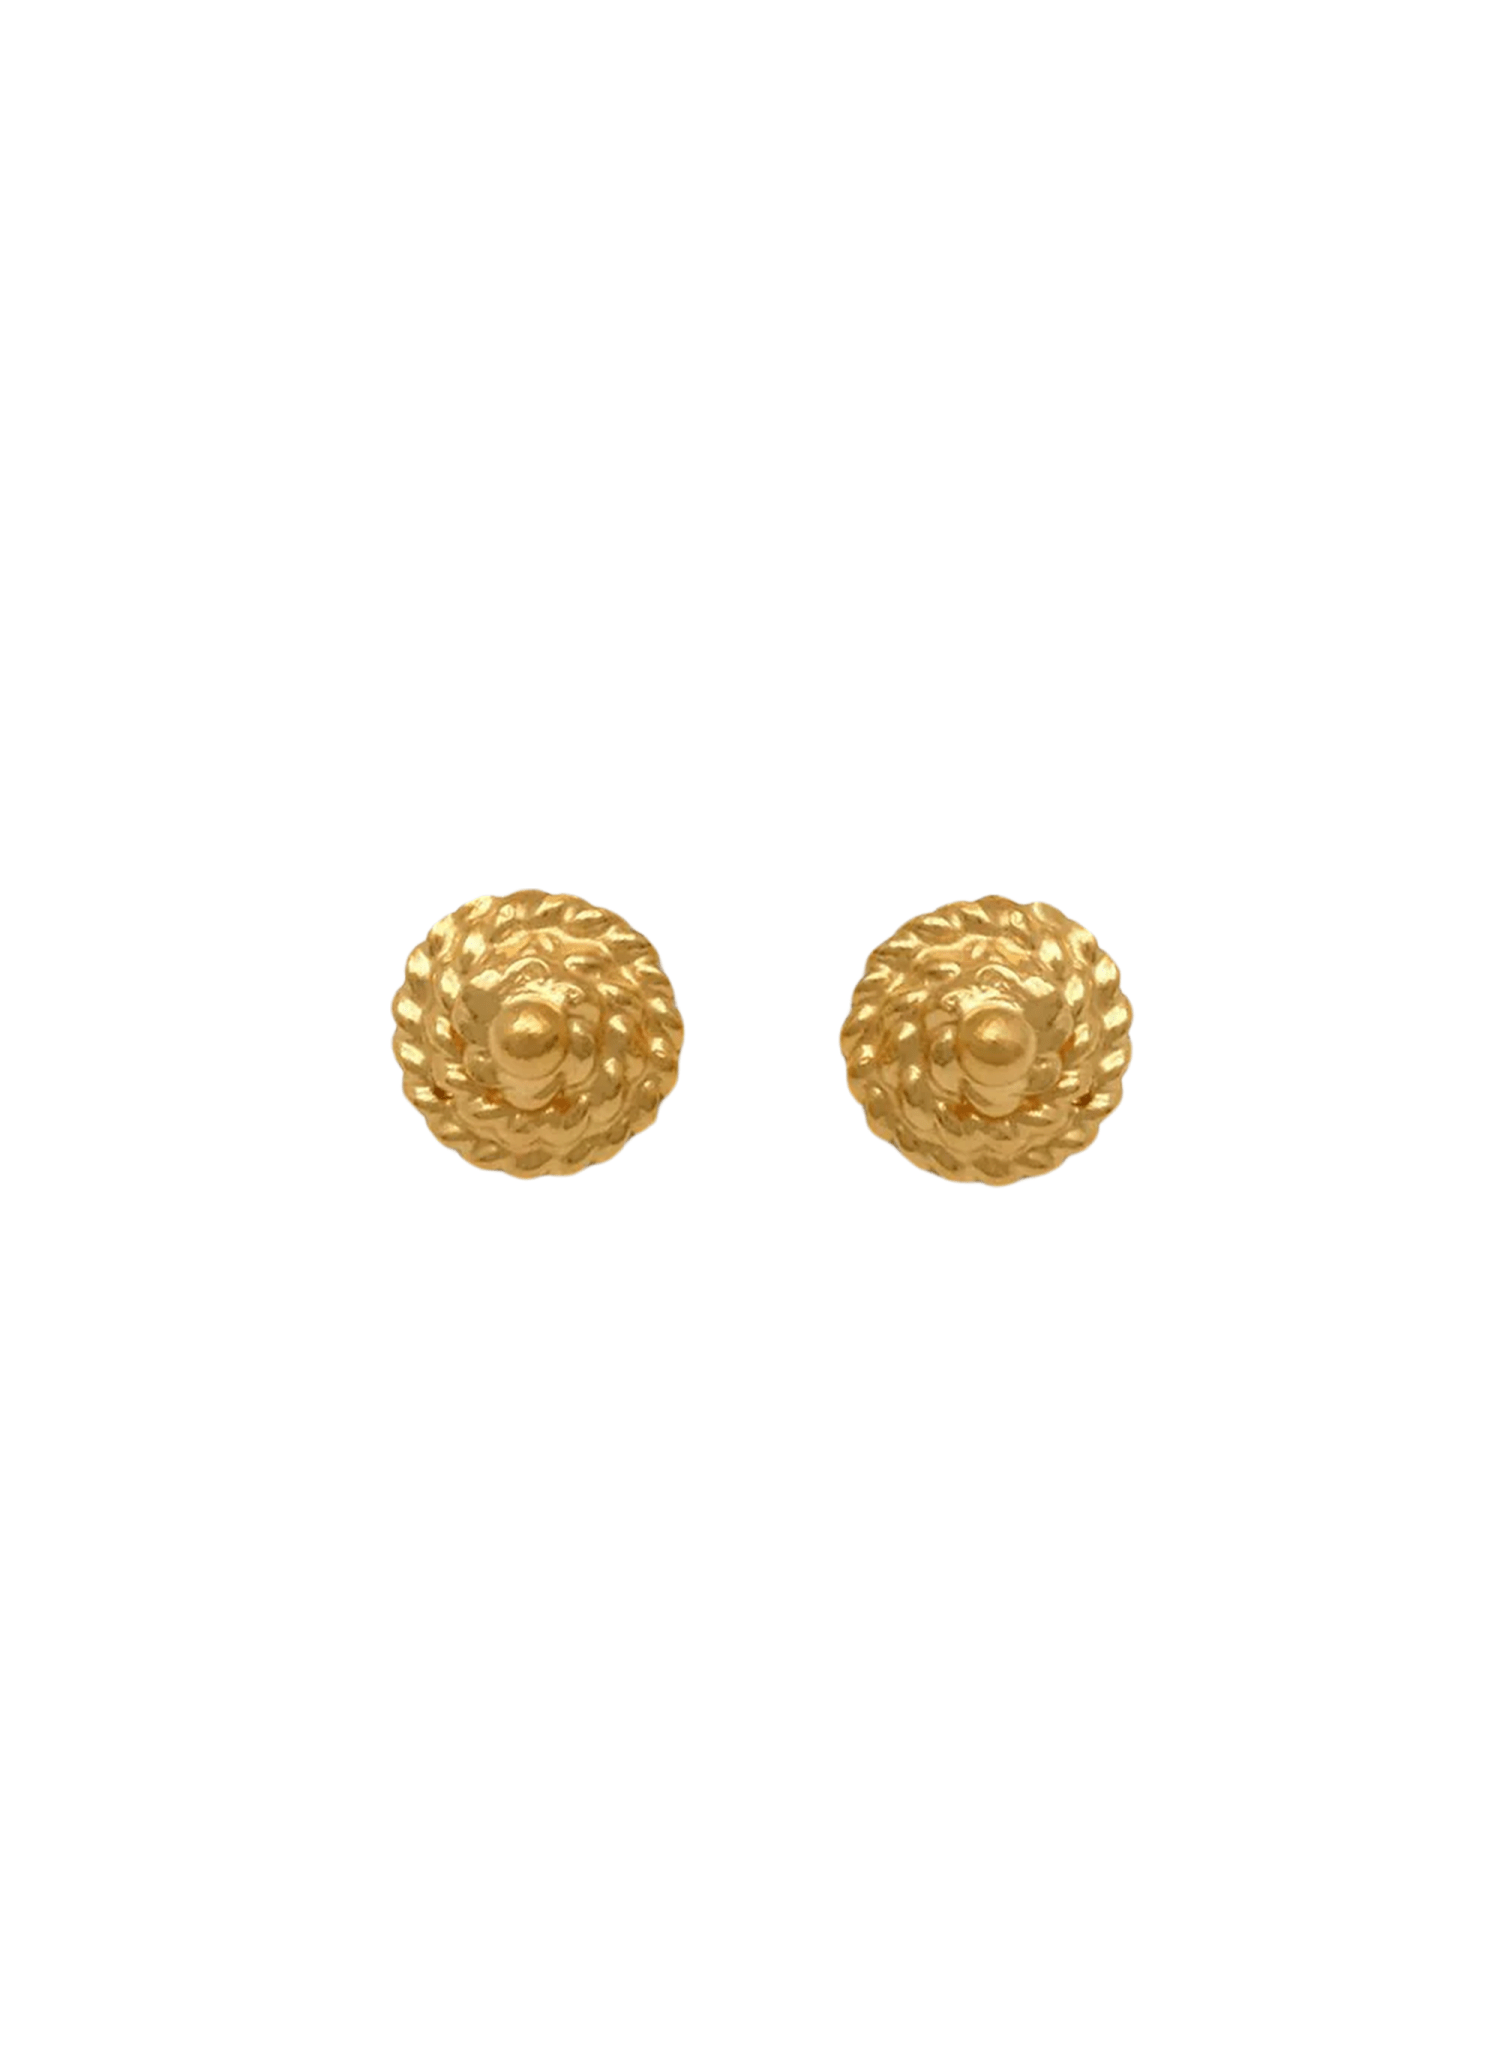 Elppin - Cable Stud Earrings - Gold - Meg